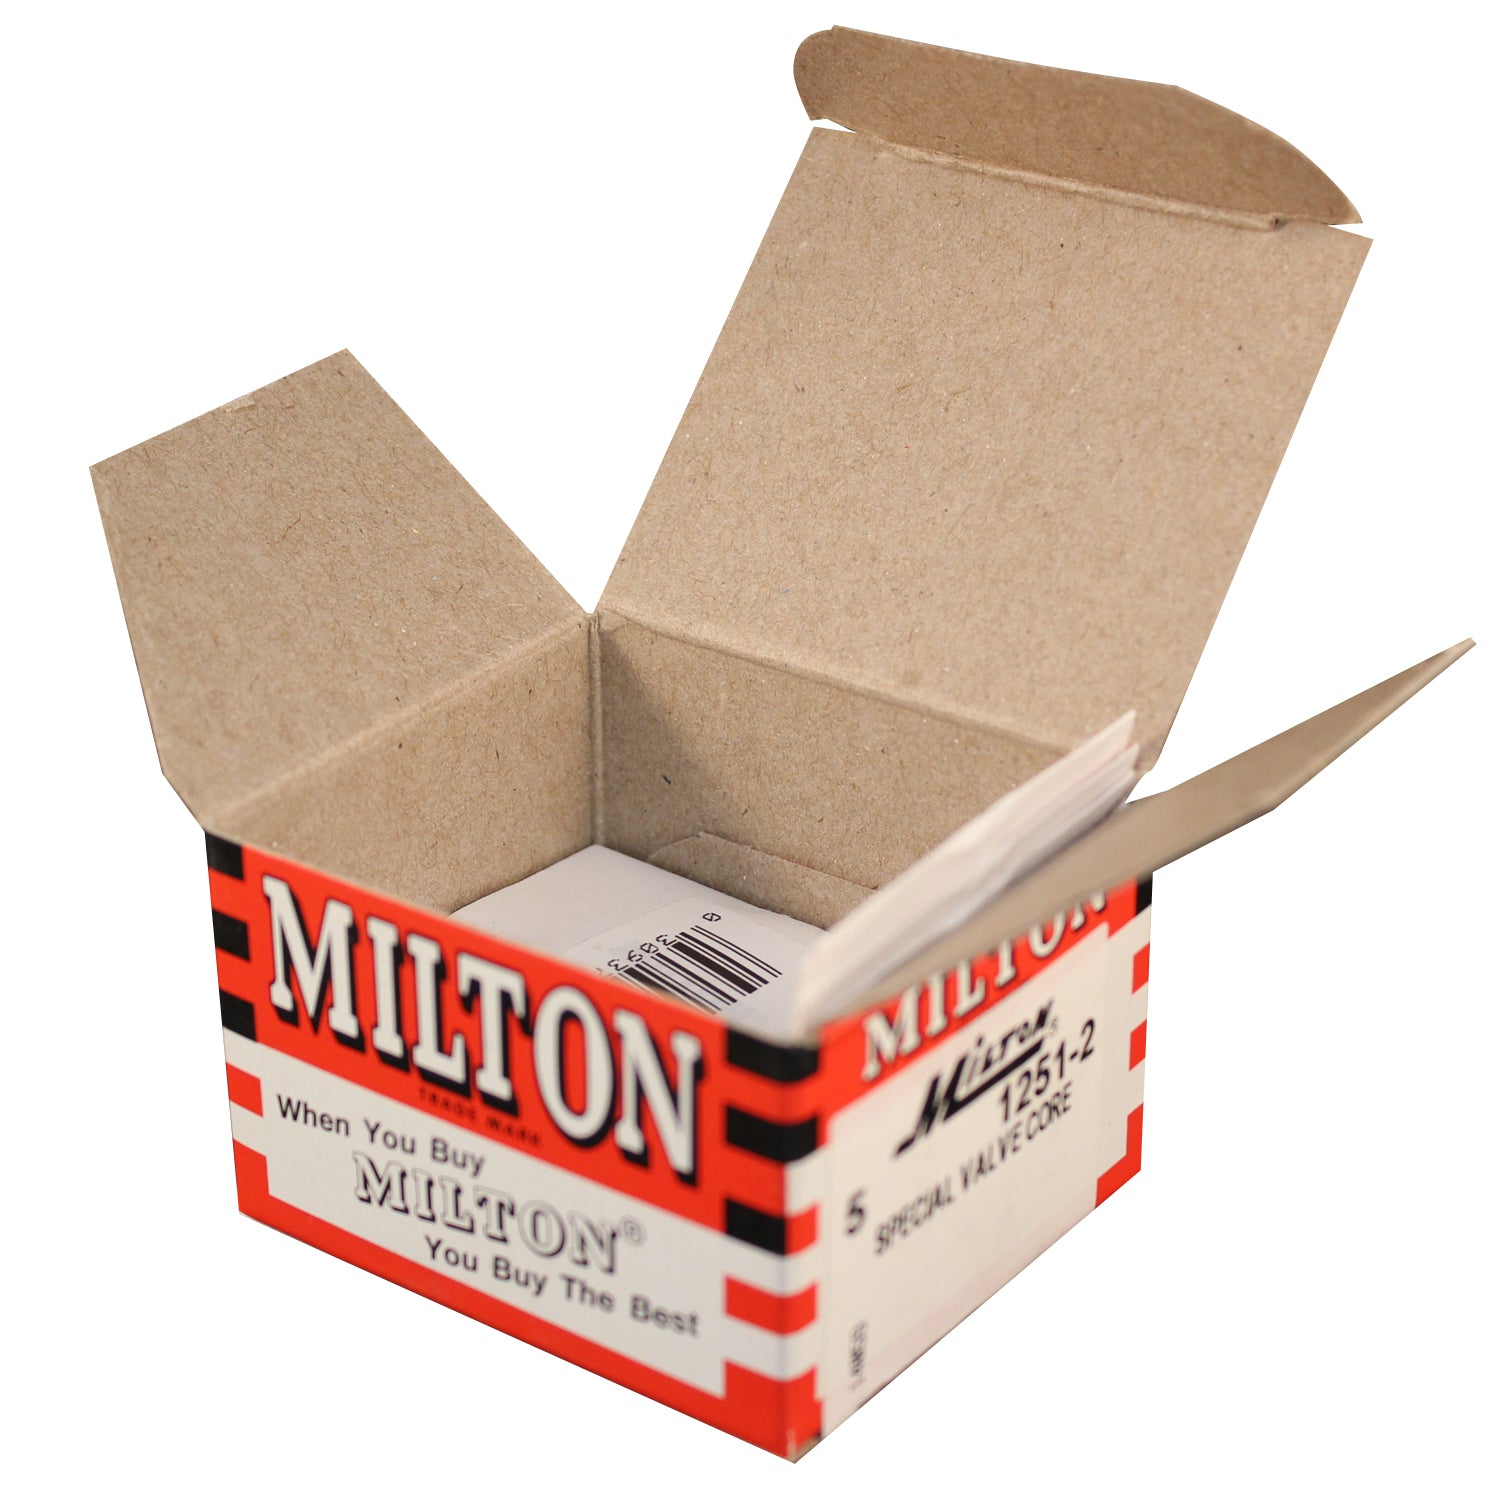 Deluxe Compression Tester Replacement Valve Core  Milton Industries Inc.®  — Milton® Industries Inc.